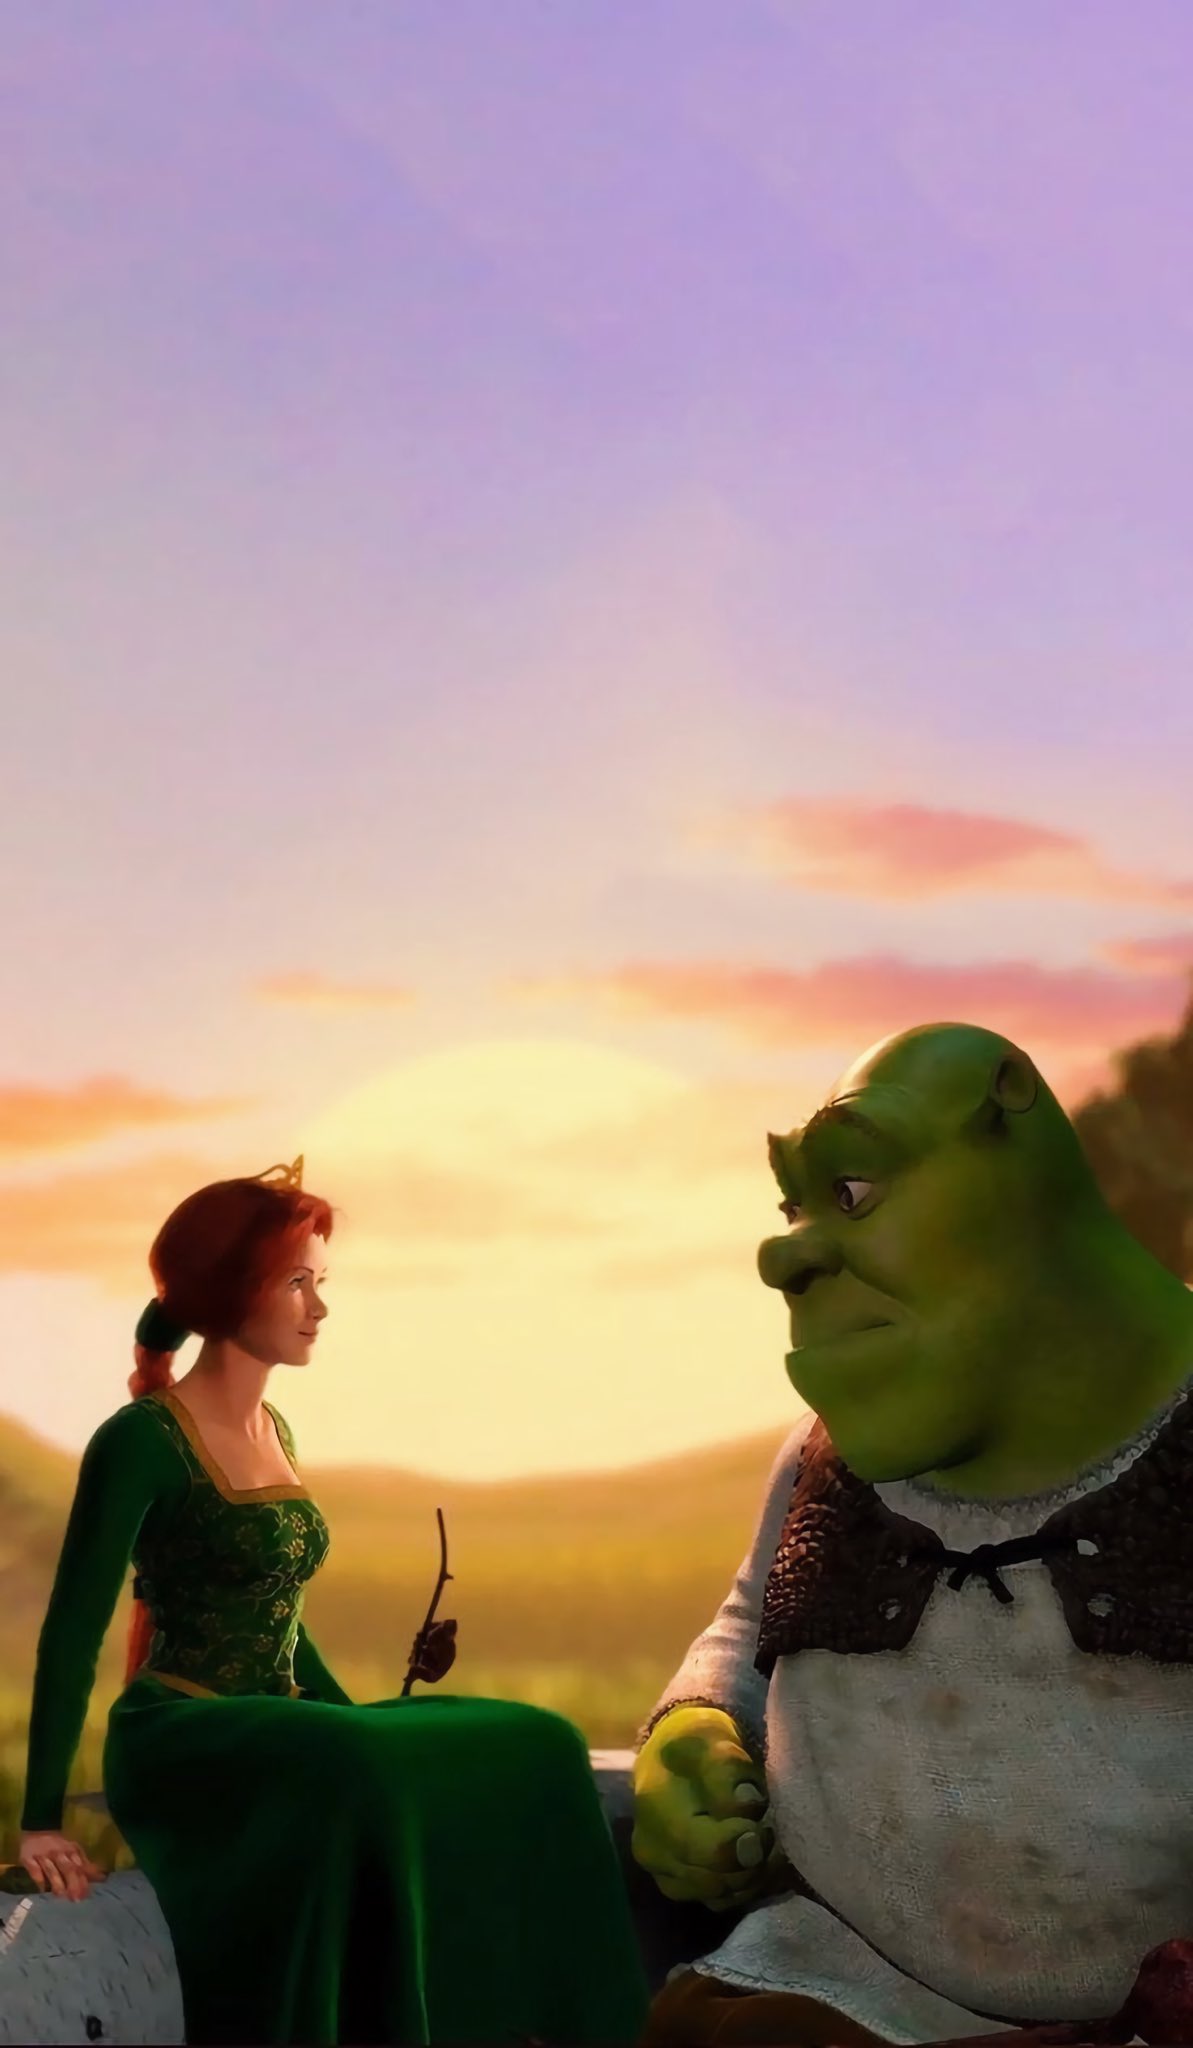 Shrek and fiona in a scene from the movie - Shrek